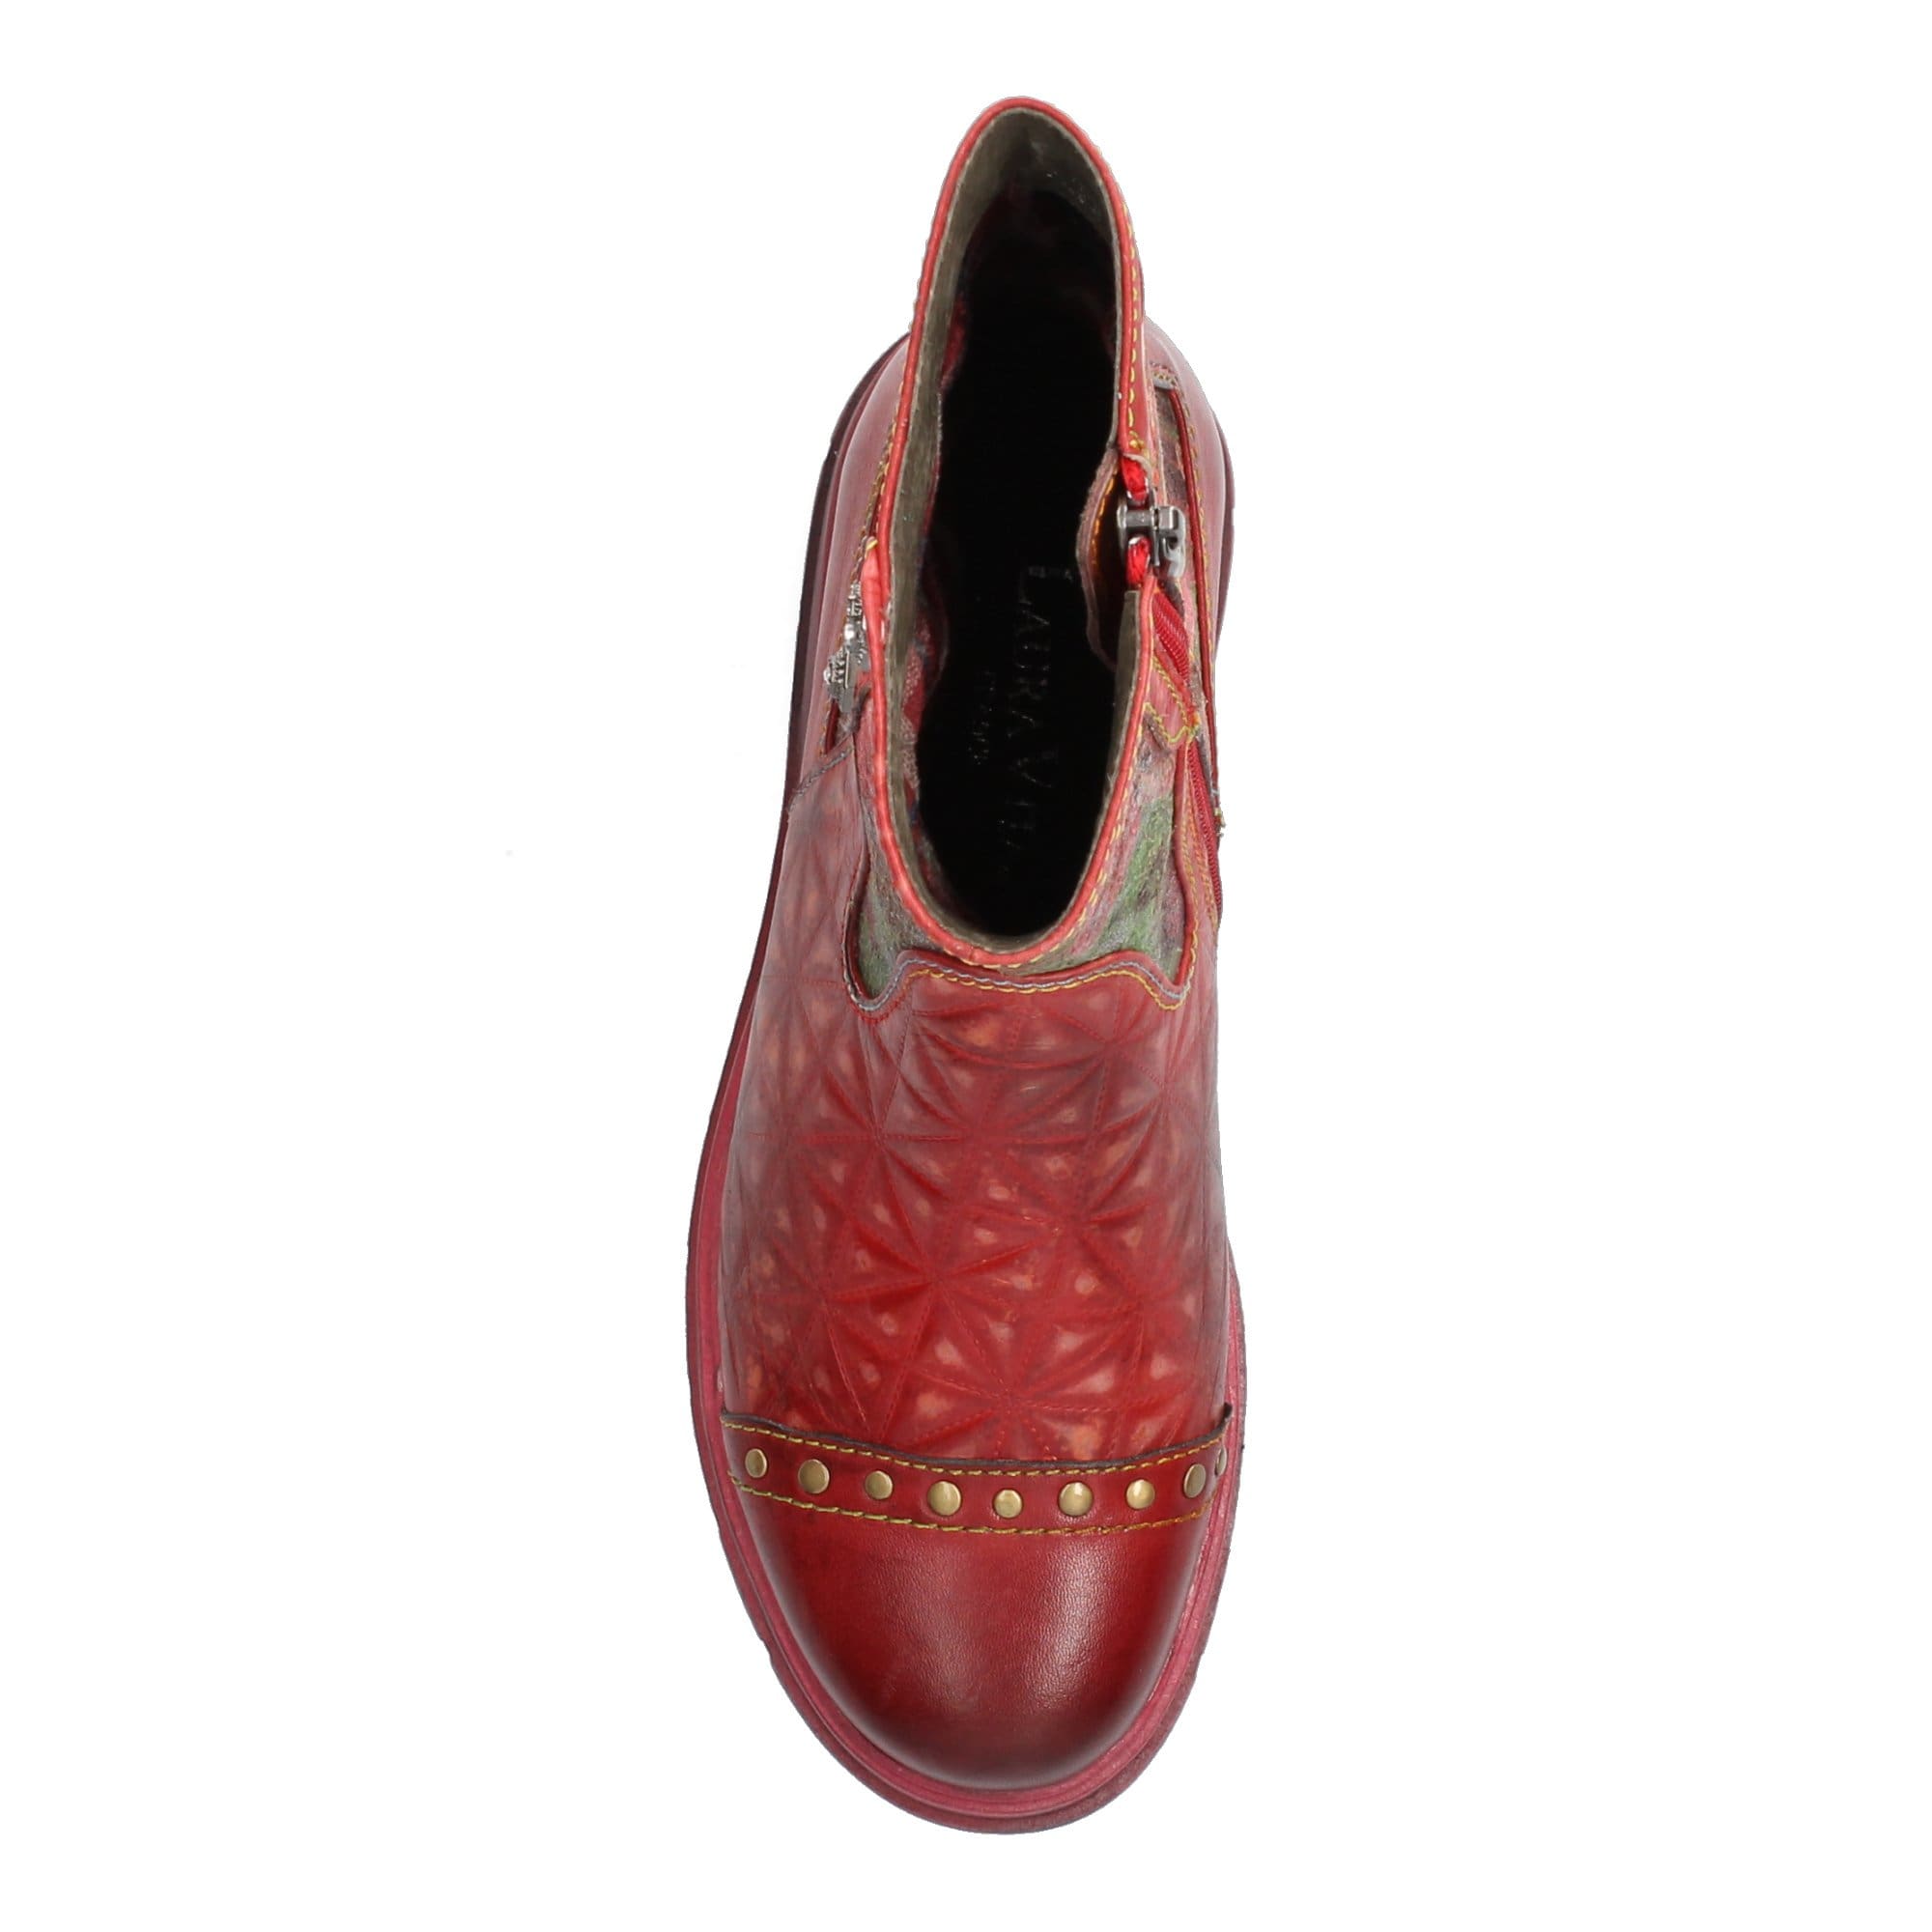 Chaussure KAELAO 02 - Boots